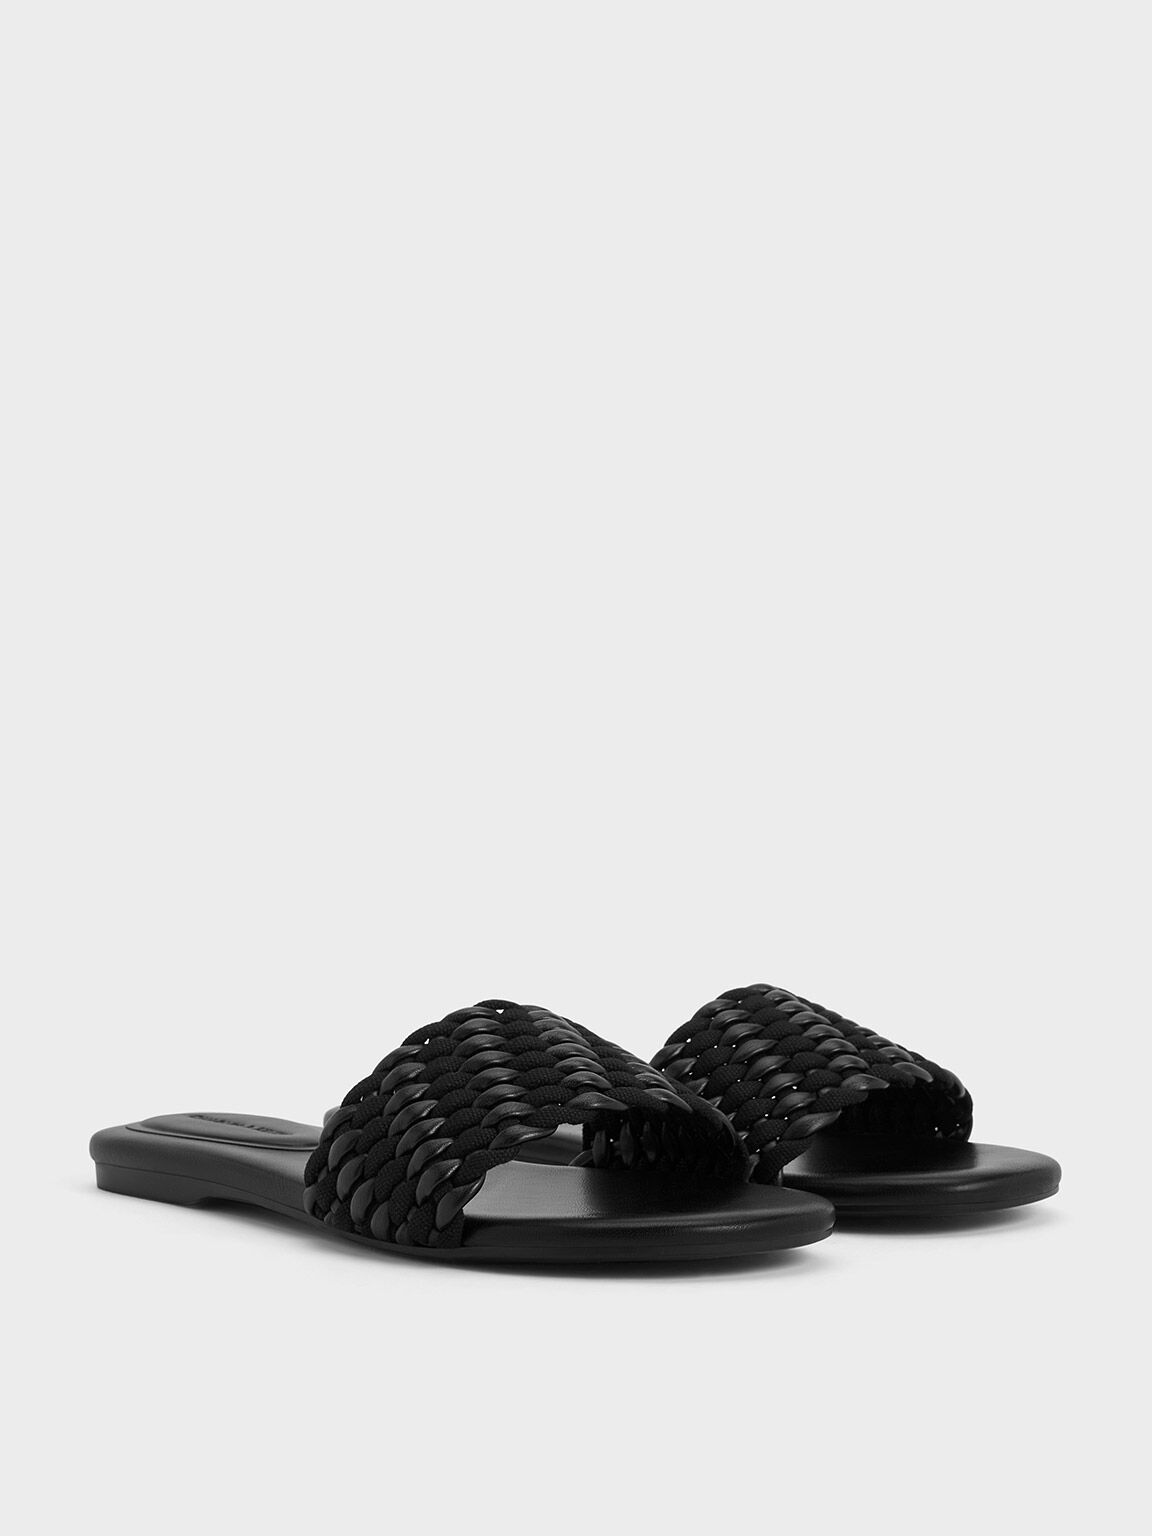 Sandal Slides Open-Toe Woven, Black, hi-res